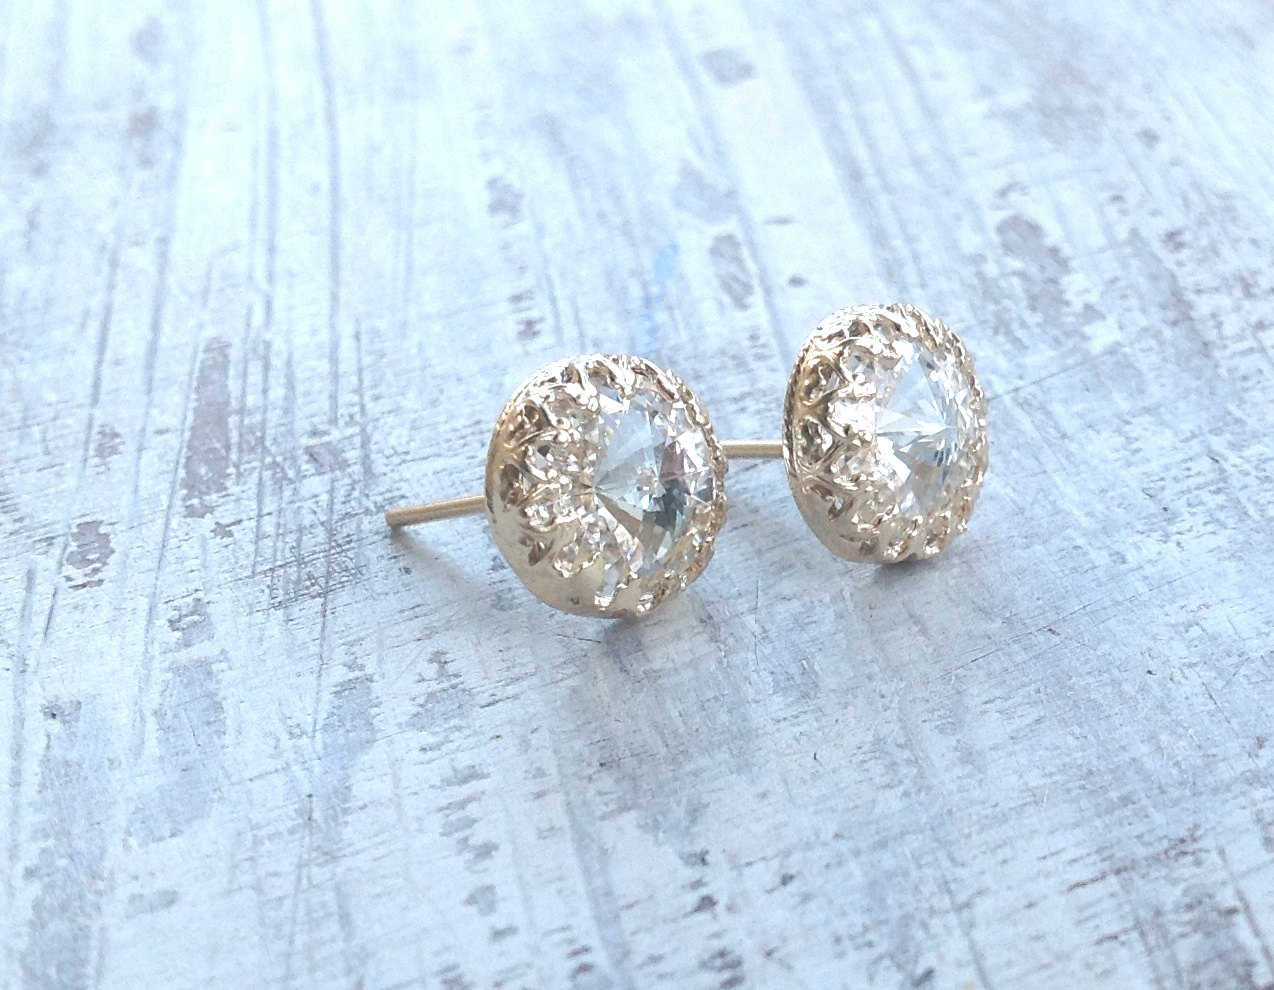 Gold earrings, crystal stud earrings, stud earrings, classic earrings, wedding earrings, Goldfilled earrings - 6100